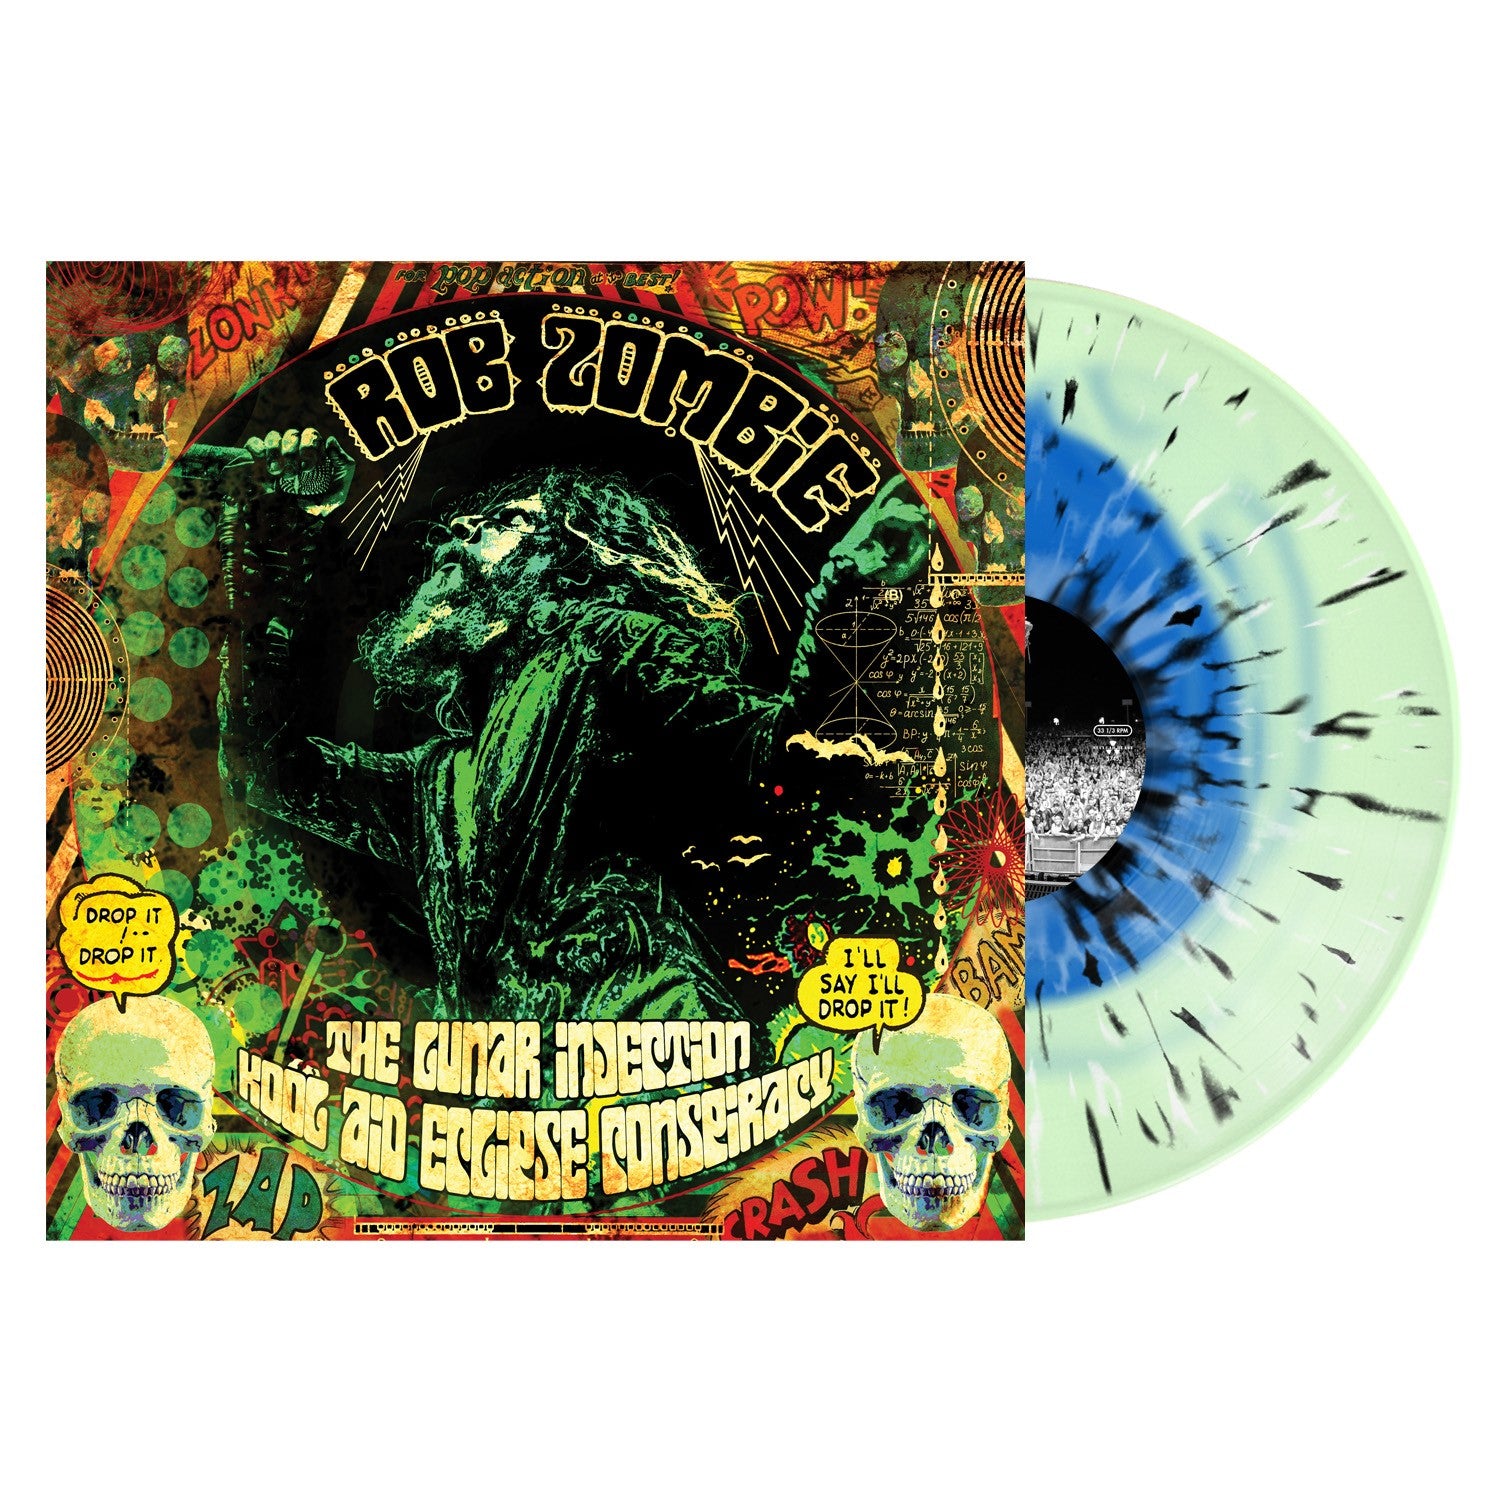 Rob Zombie "The Lunar Injection Kool Aid Eclipse Conspiracy" Blue in Bottle Green w/ Black Splatter Vinyl - PRE-ORDER